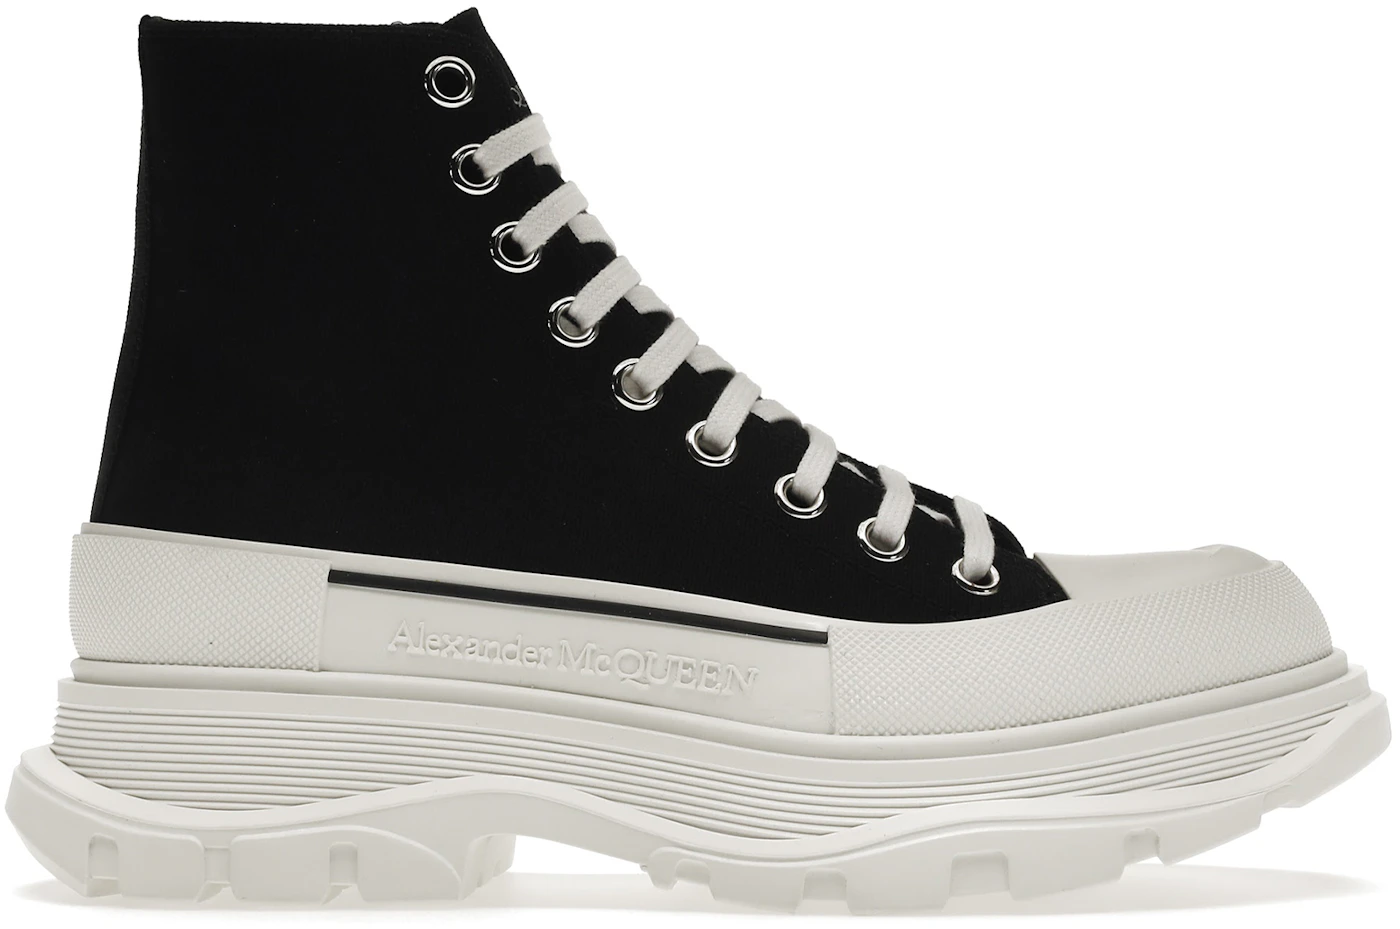 Alexander McQueen Tread Slick Lace Up Boot Black White